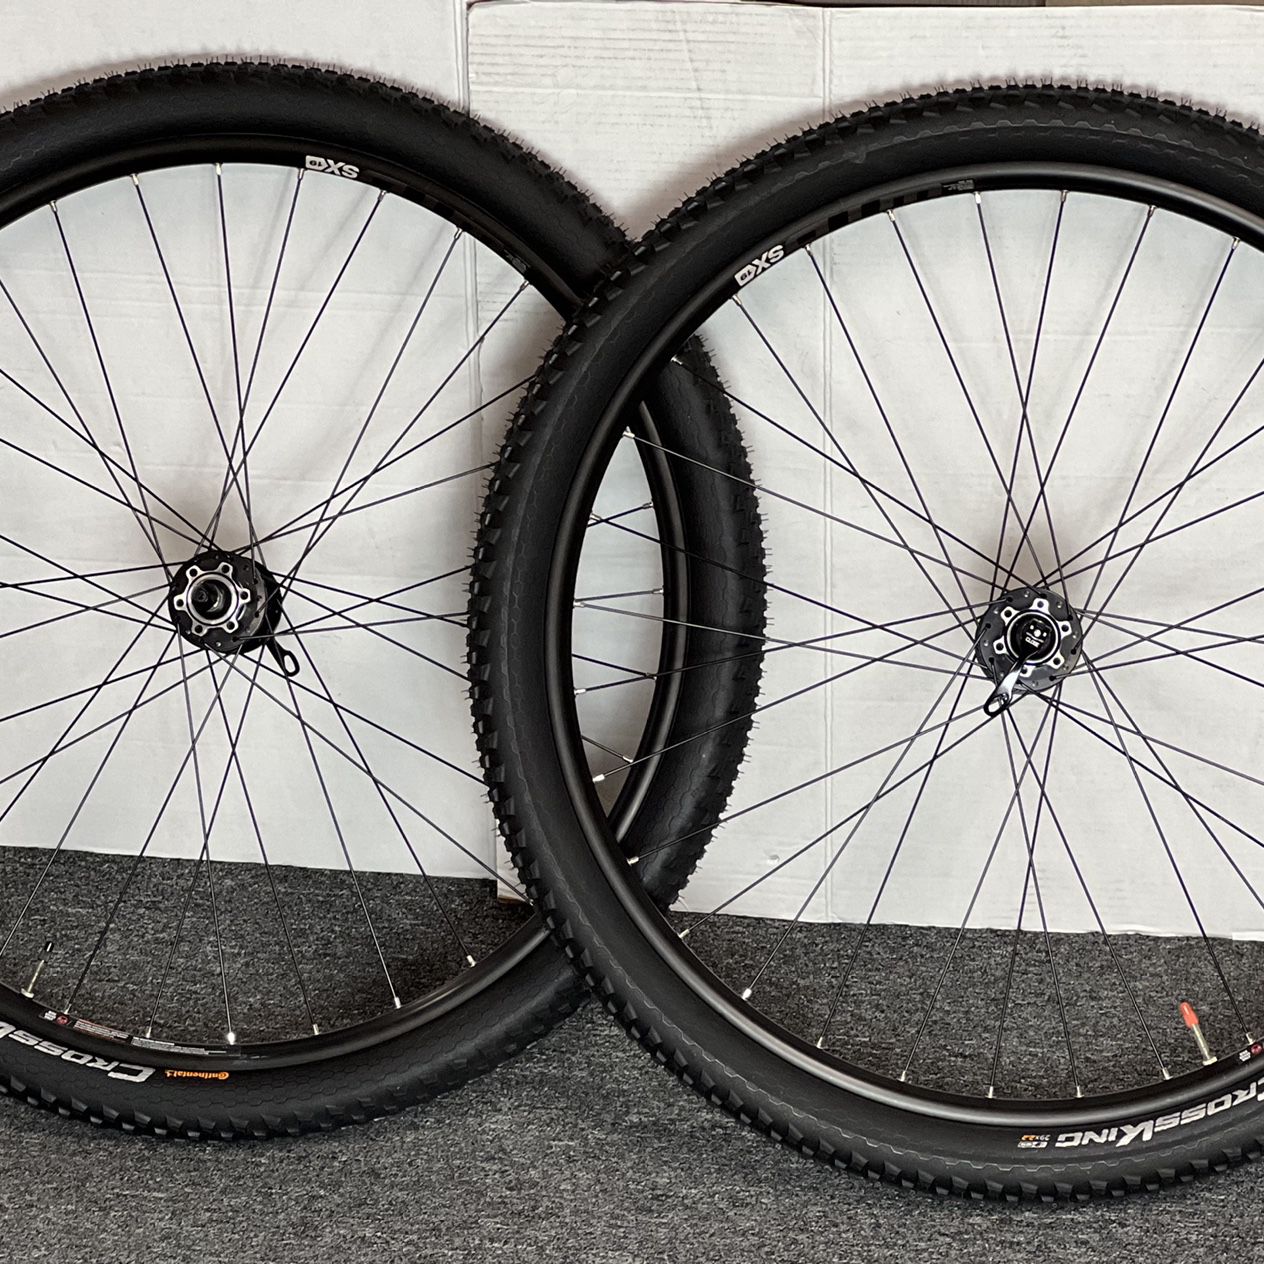 WTB SX19 Mountain Bike MTB Bicycle Novatec Hubs & Continental X-King Tyres Wheelset 11speed 29" Front 15x100mm Rear 12x142mm Thru Axle